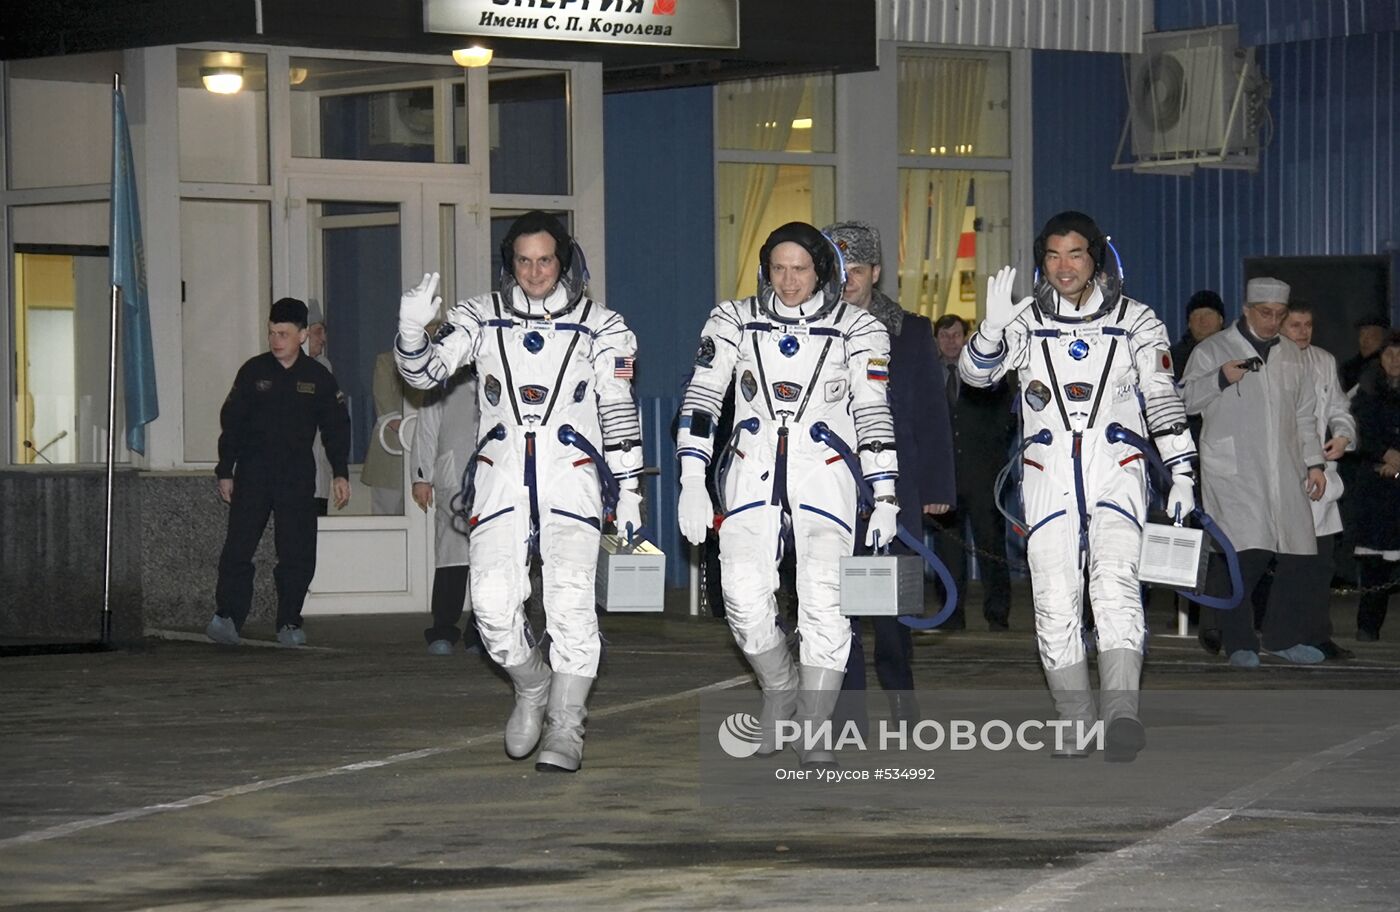 Новый экипаж на МКС перед стартом ПКК "Союз ТМА-17"